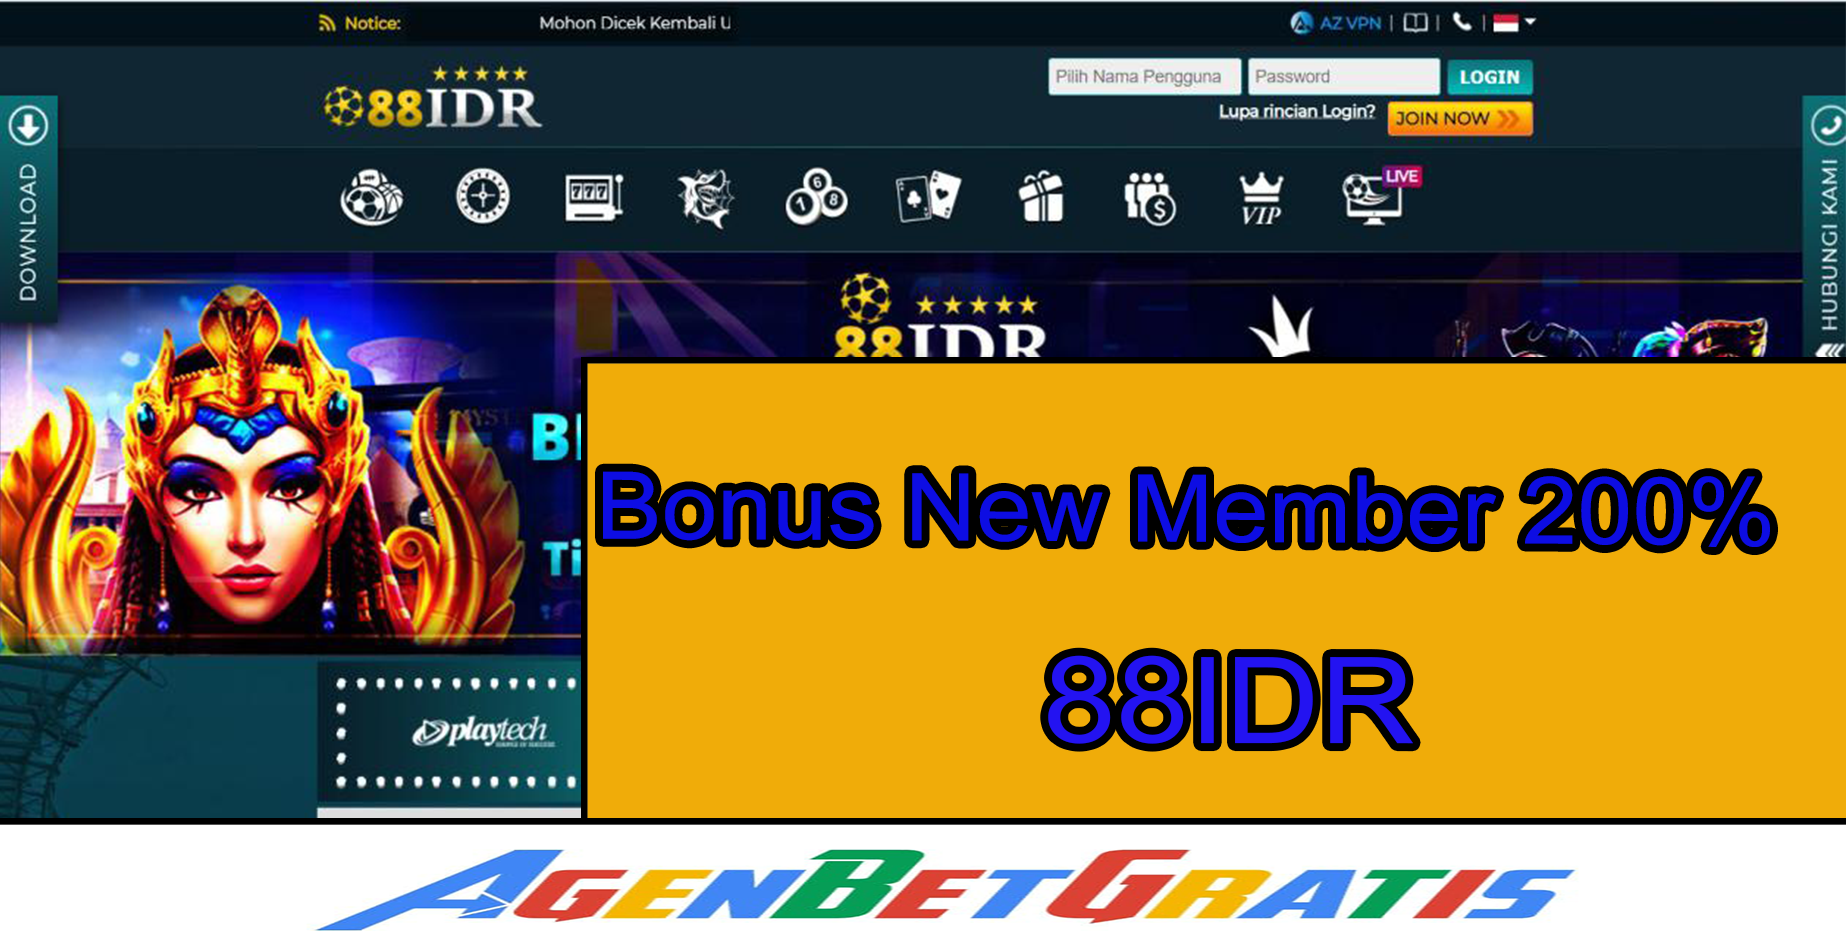 88IDR- Bonus New Member 200%